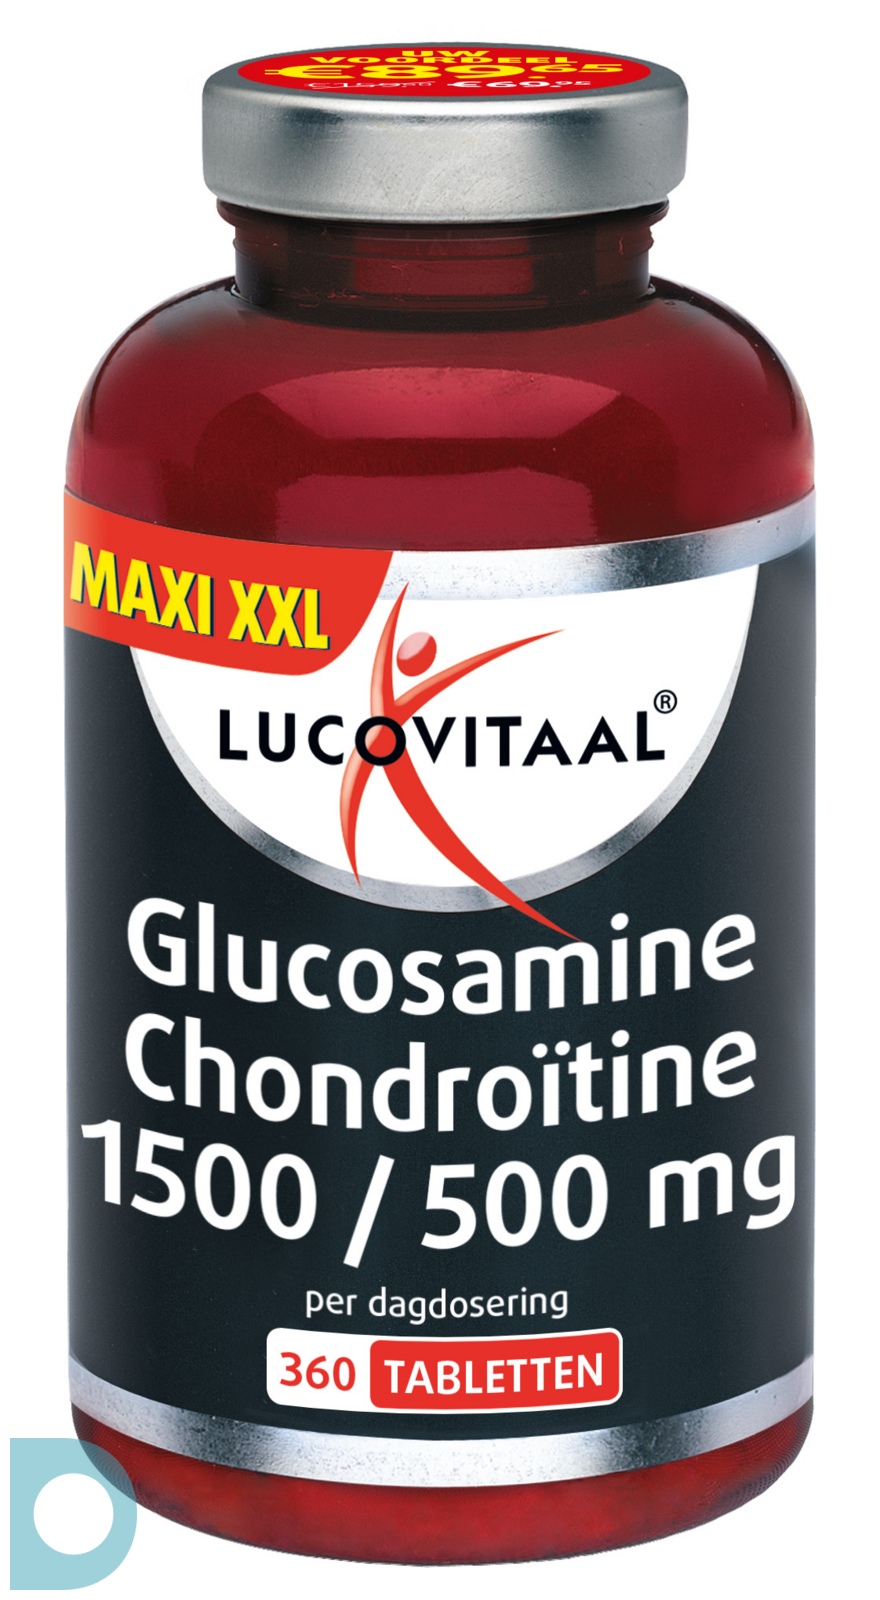 as een keer knal Lucovitaal Glucosamine Chondroïtine 1500/500mg Tabletten | De Online Drogist